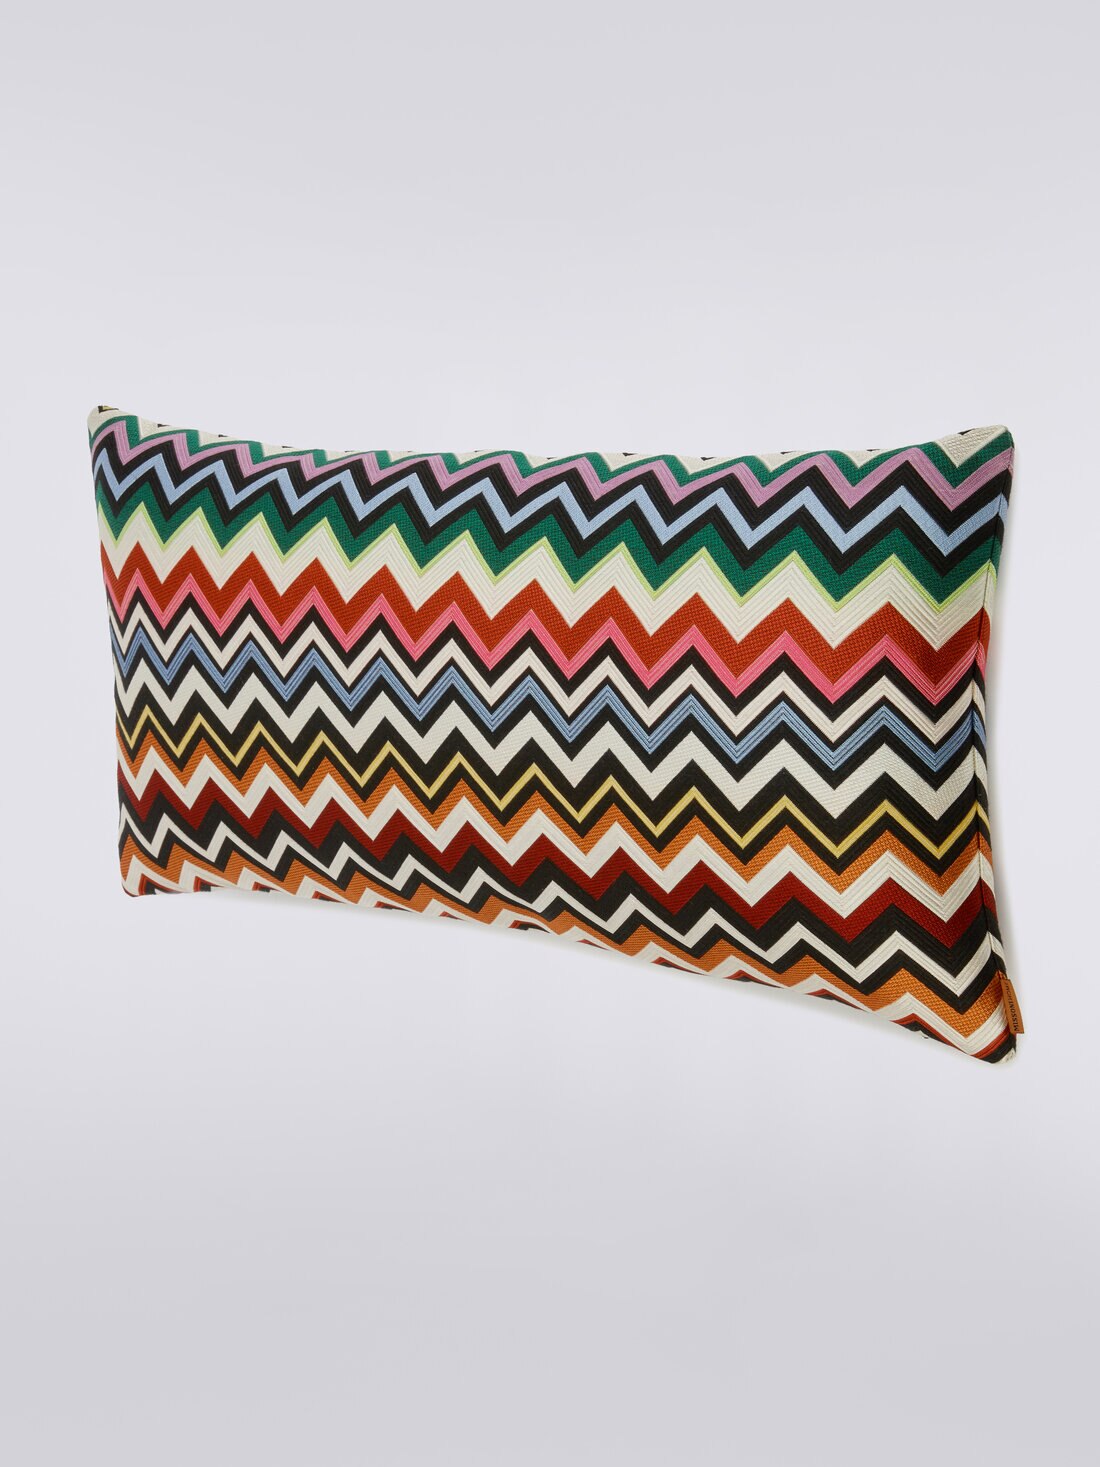 Belfast cushion 30x60 cm, Multicoloured  - 8051275608424 - 1